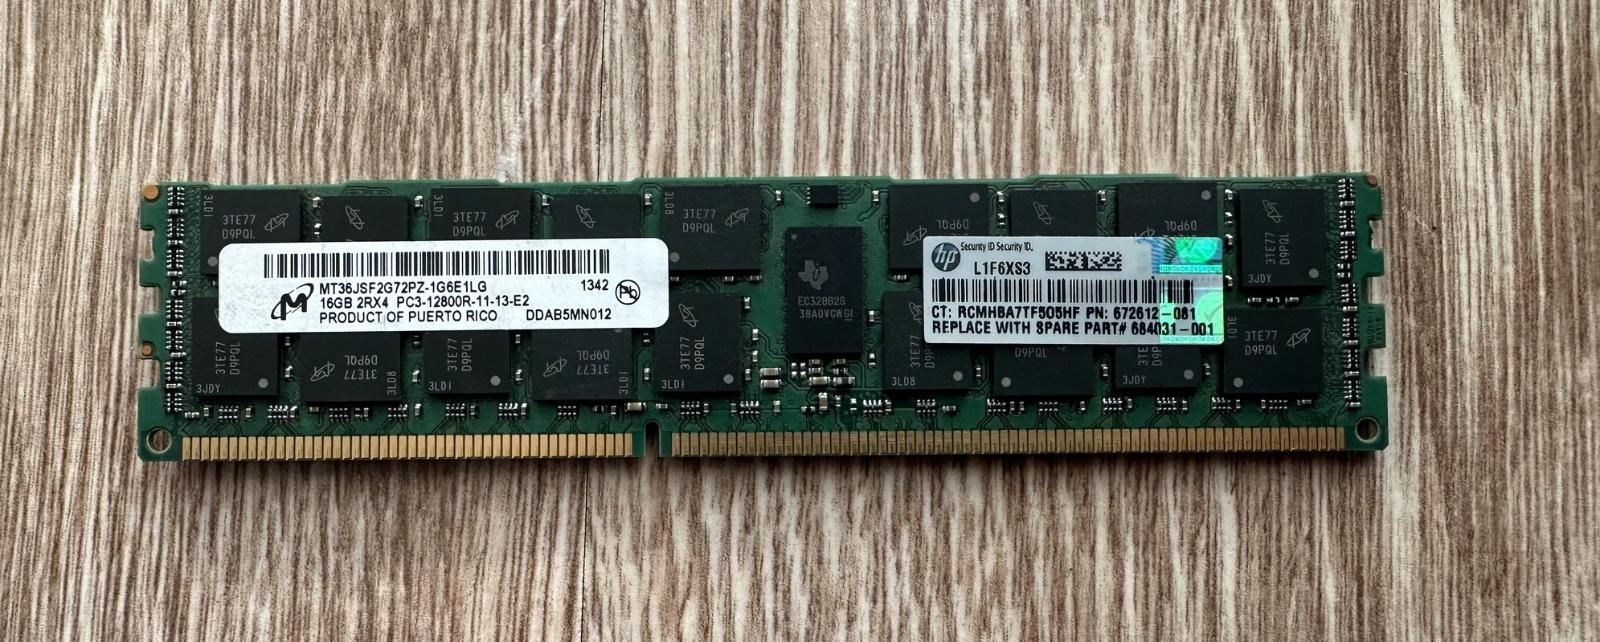 16GB DDR3 Micron MT36JSF2G72PZ-1G6E1LG ECC 672612-081 - Počítače a hry